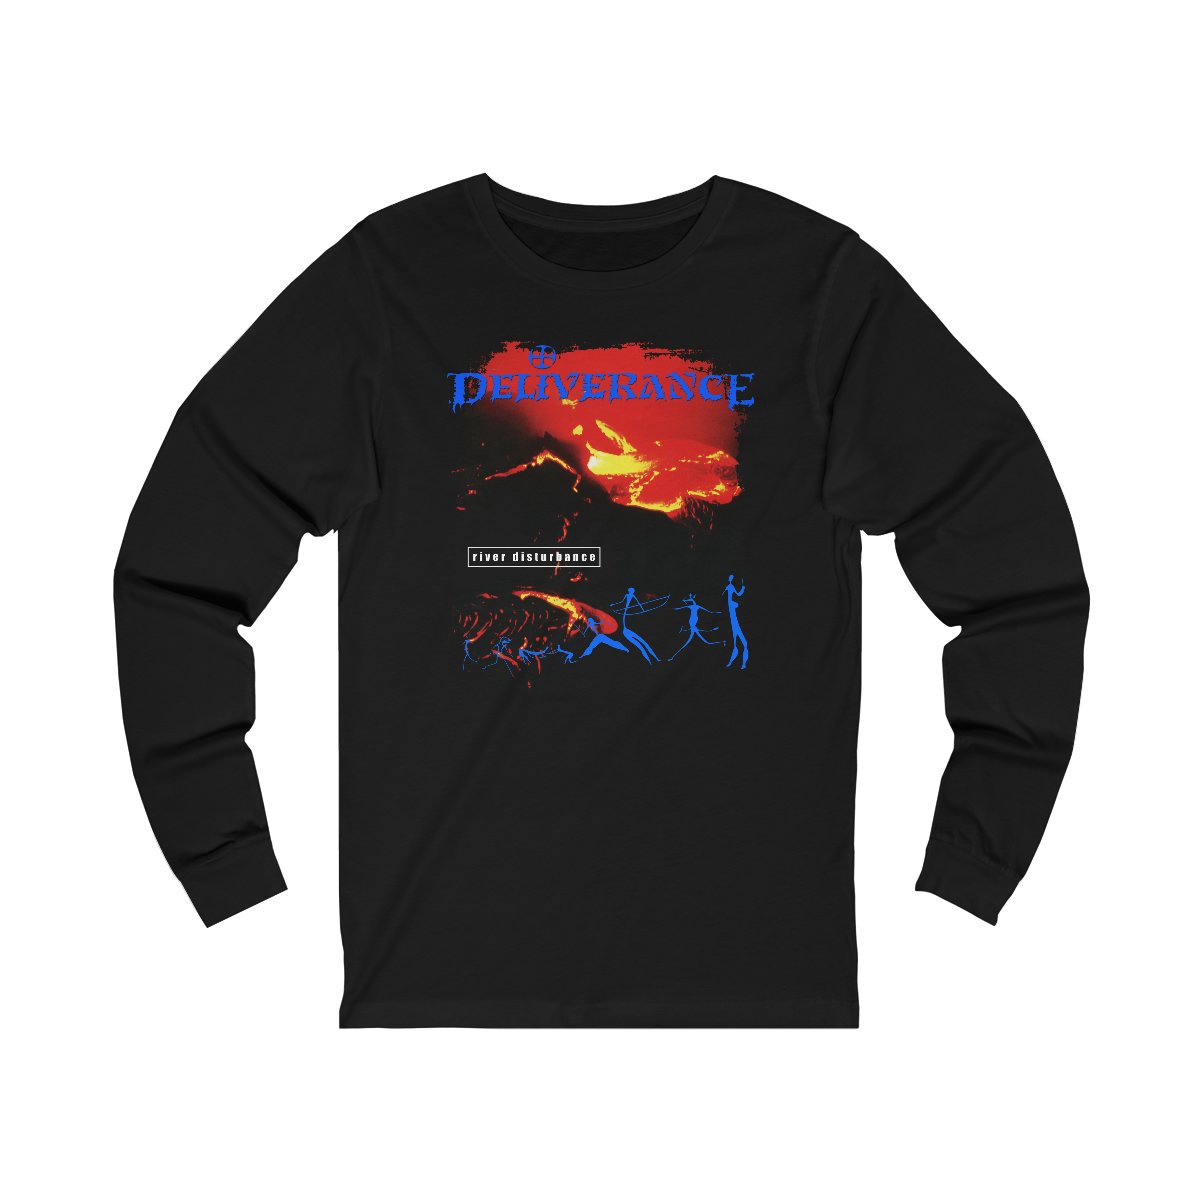 Deliverance – River Disturbance Long Sleeve Tshirt 3501D